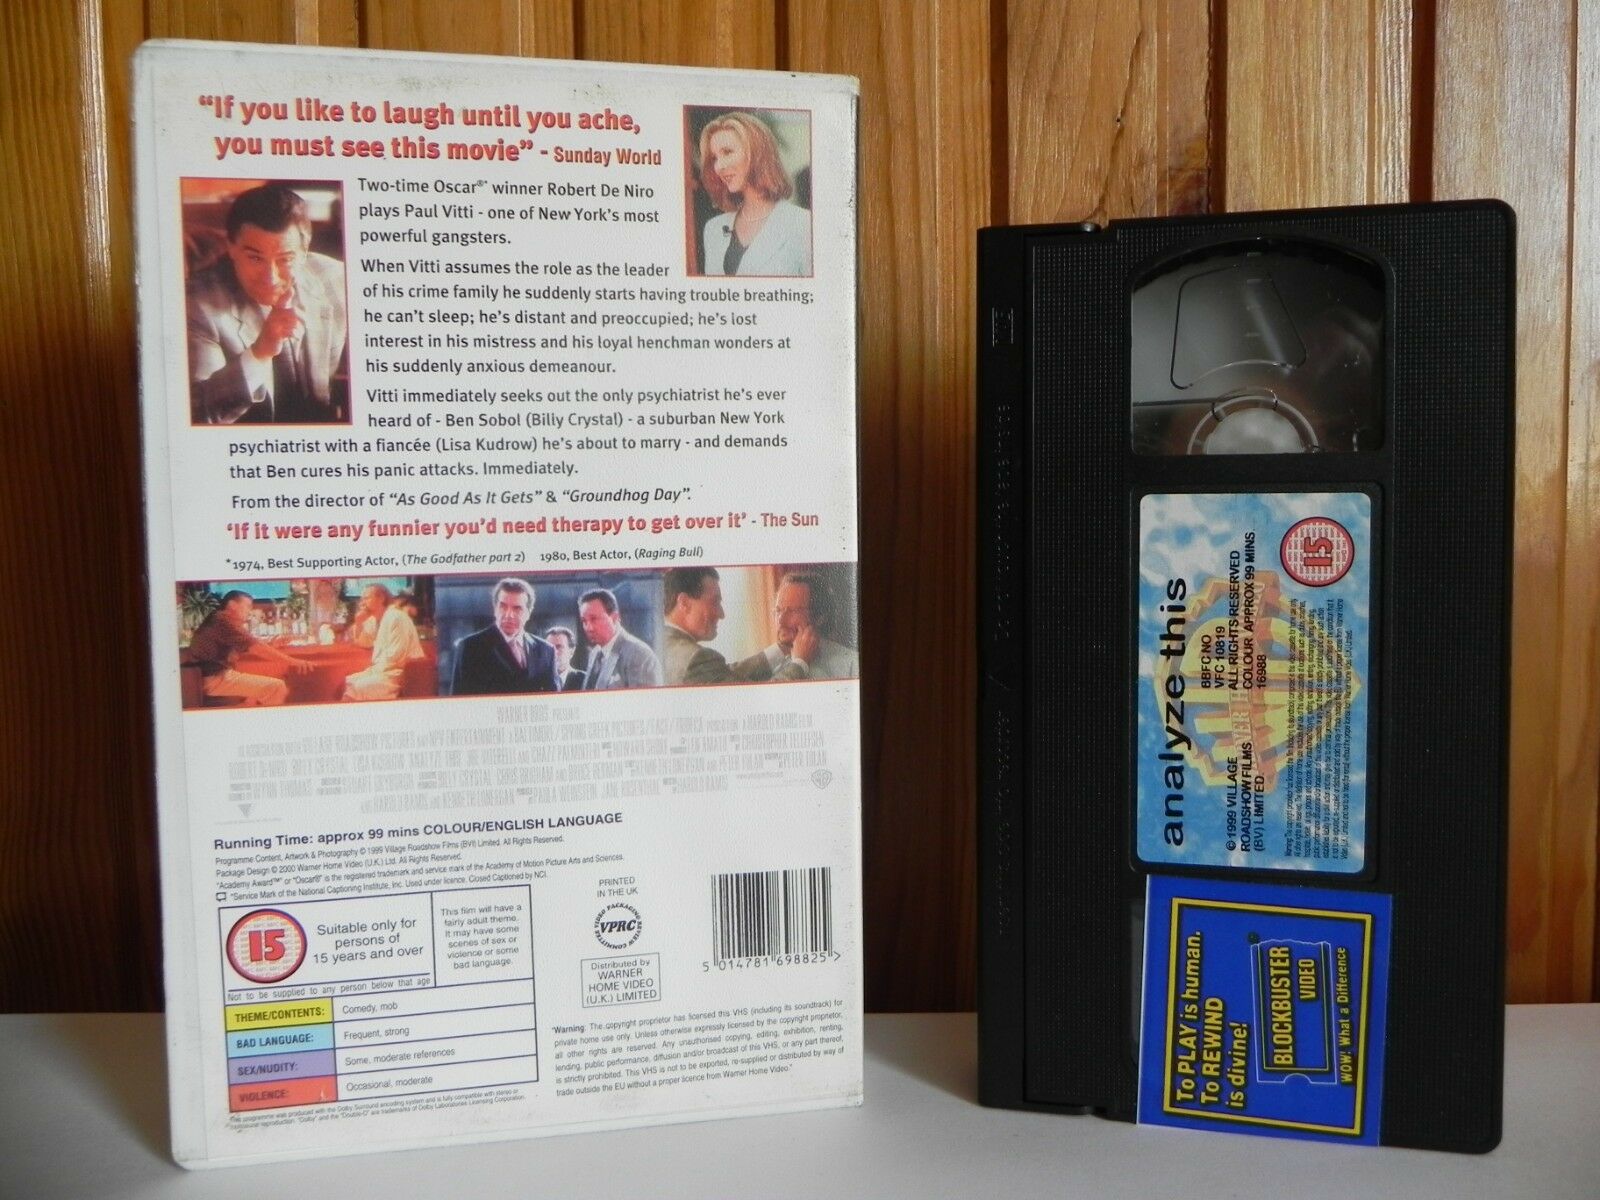 Analyze This (1999): Gangster Comedy [Rental] Robert De Niro - Big Box - Pal VHS-